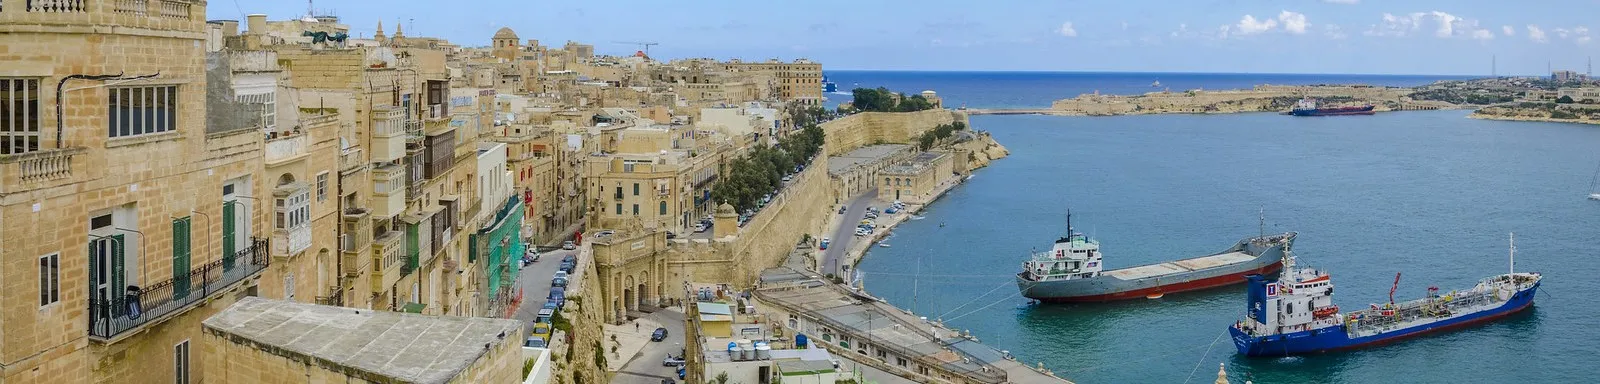 Malta Banner Image